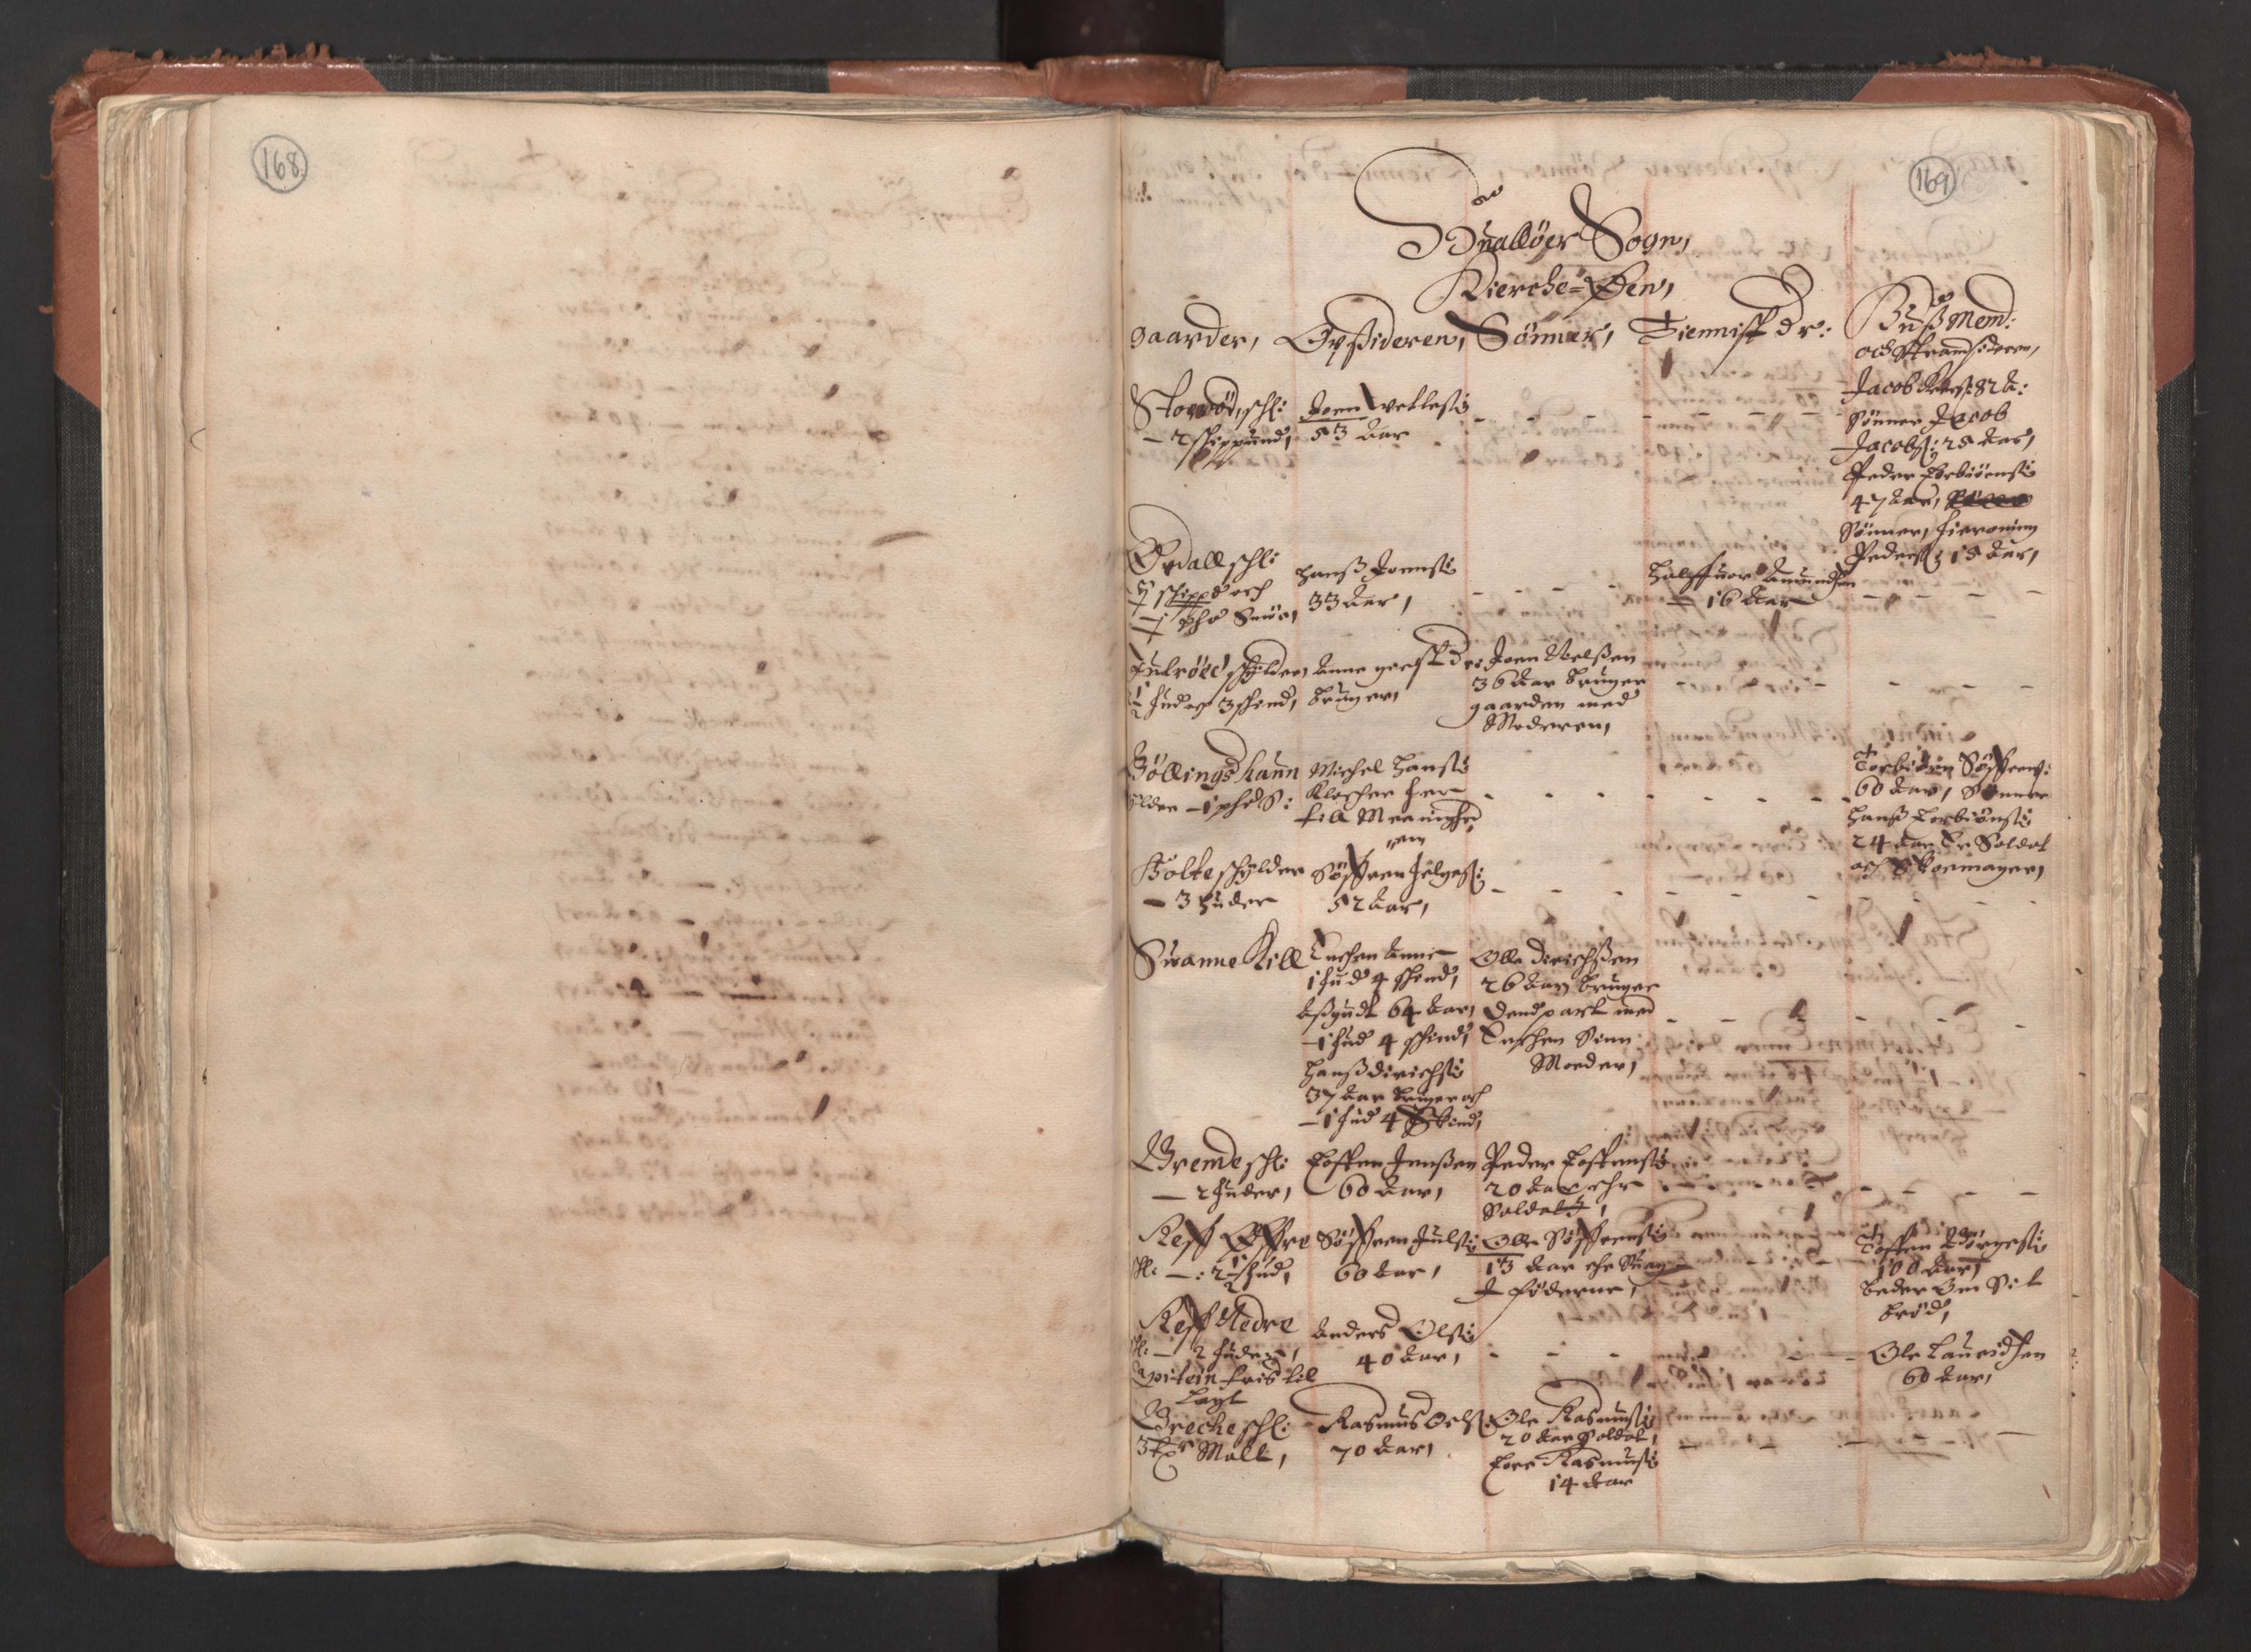 RA, Fogdenes og sorenskrivernes manntall 1664-1666, nr. 1: Fogderier (len og skipreider) i nåværende Østfold fylke, 1664, s. 168-169